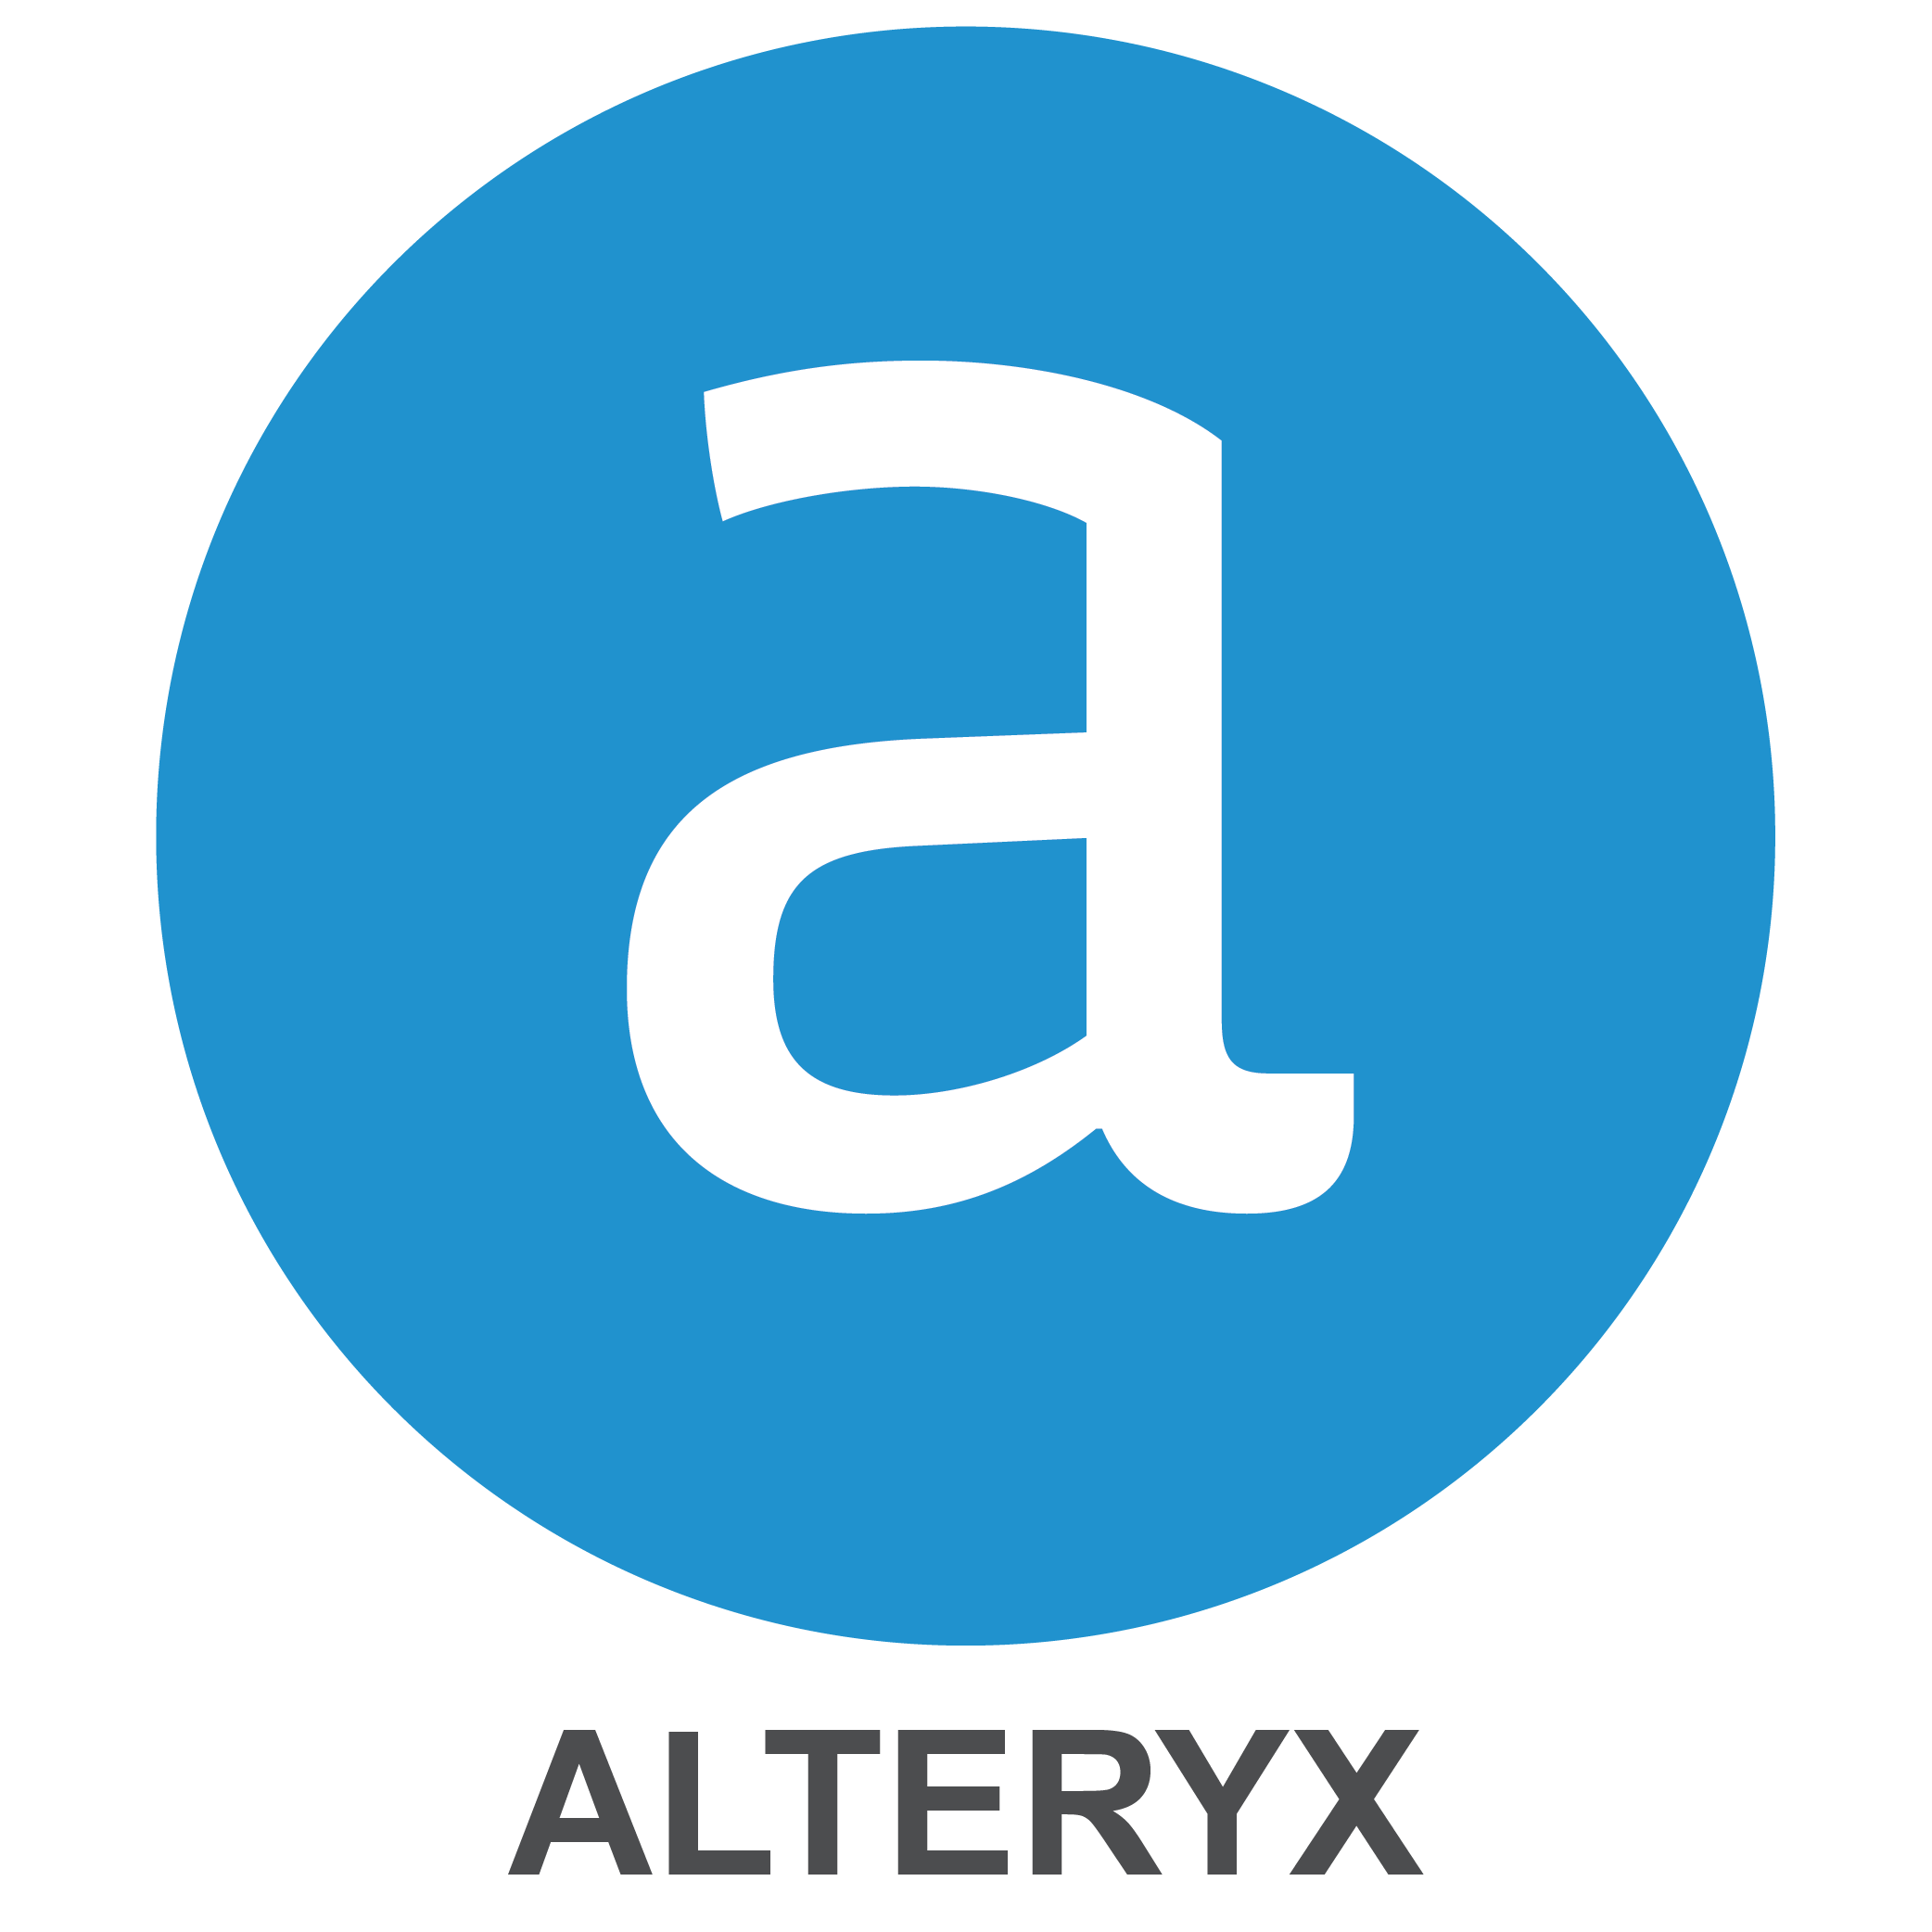 Logo of Alteryx software